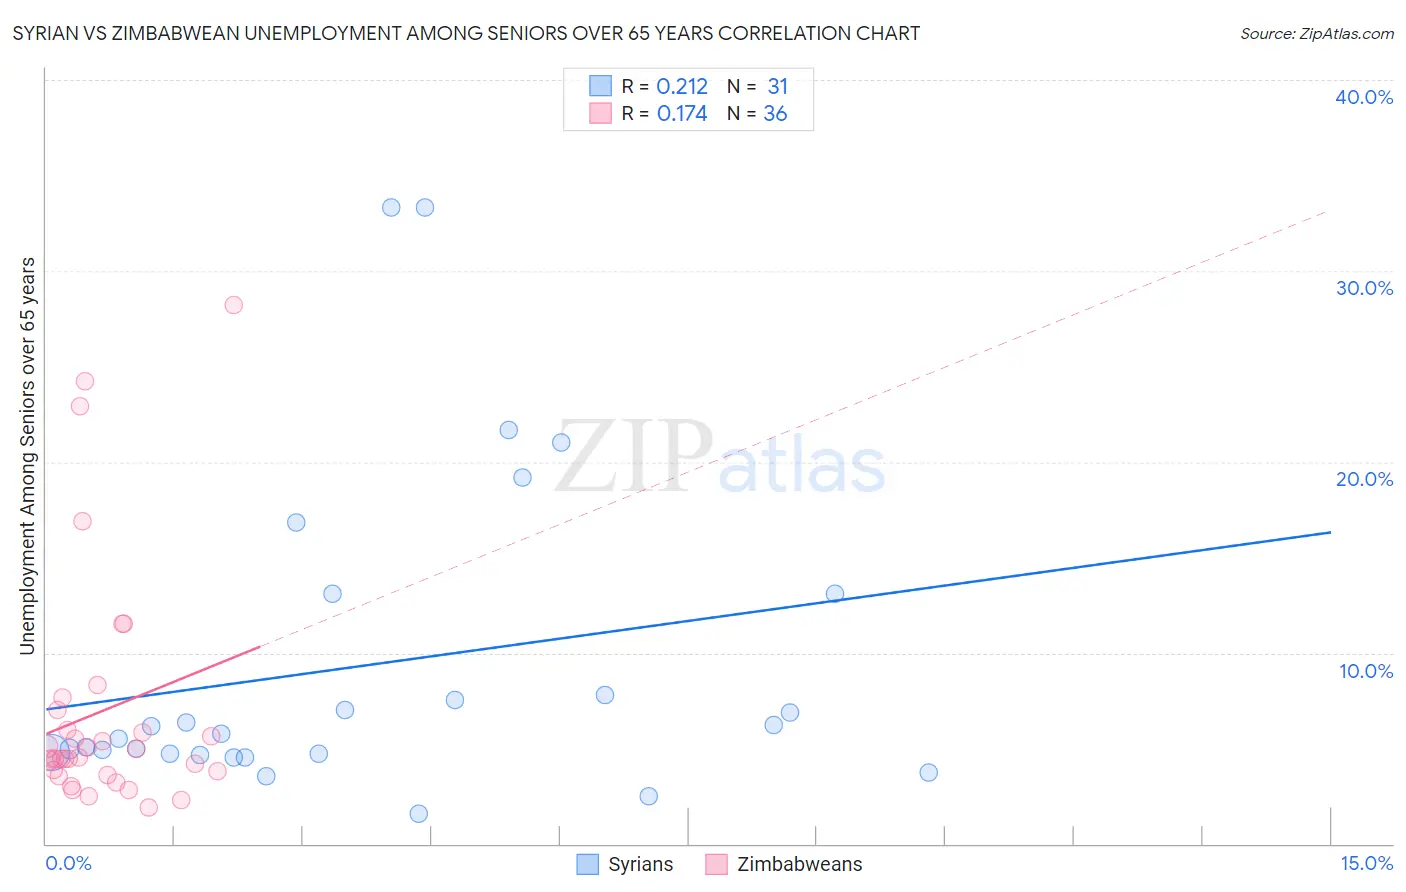 Syrian vs Zimbabwean Unemployment Among Seniors over 65 years